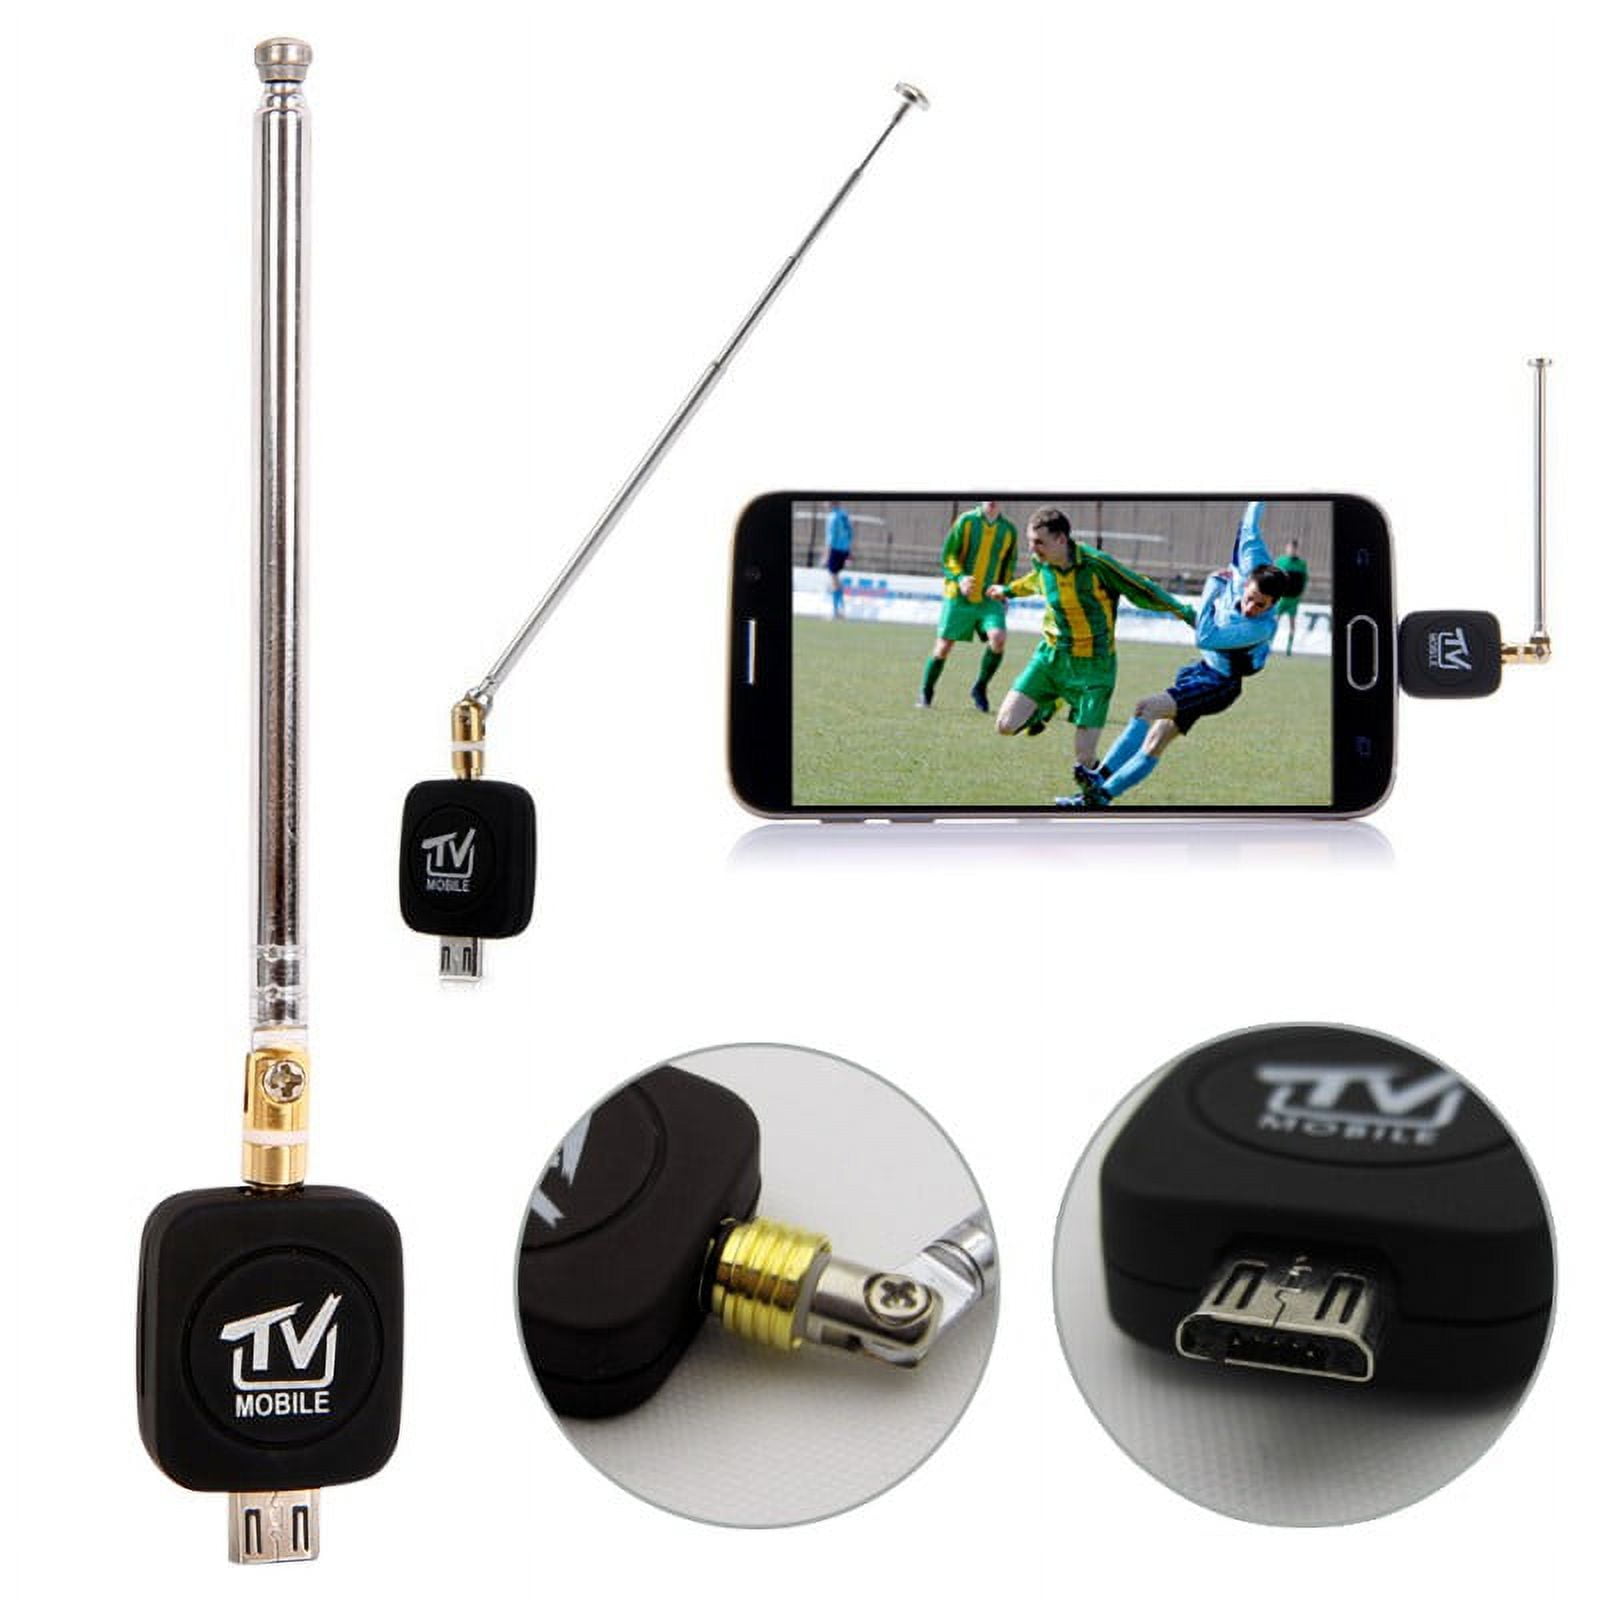 DVB-T305 Sintonizador TDT HD Micro USB - August DVB-T305 - Receptor TDT  DVB-T2 y DVB-T para Tabletas y Smartphones - Funciona mediante USB /  Android 4.1 / Grabador PVR